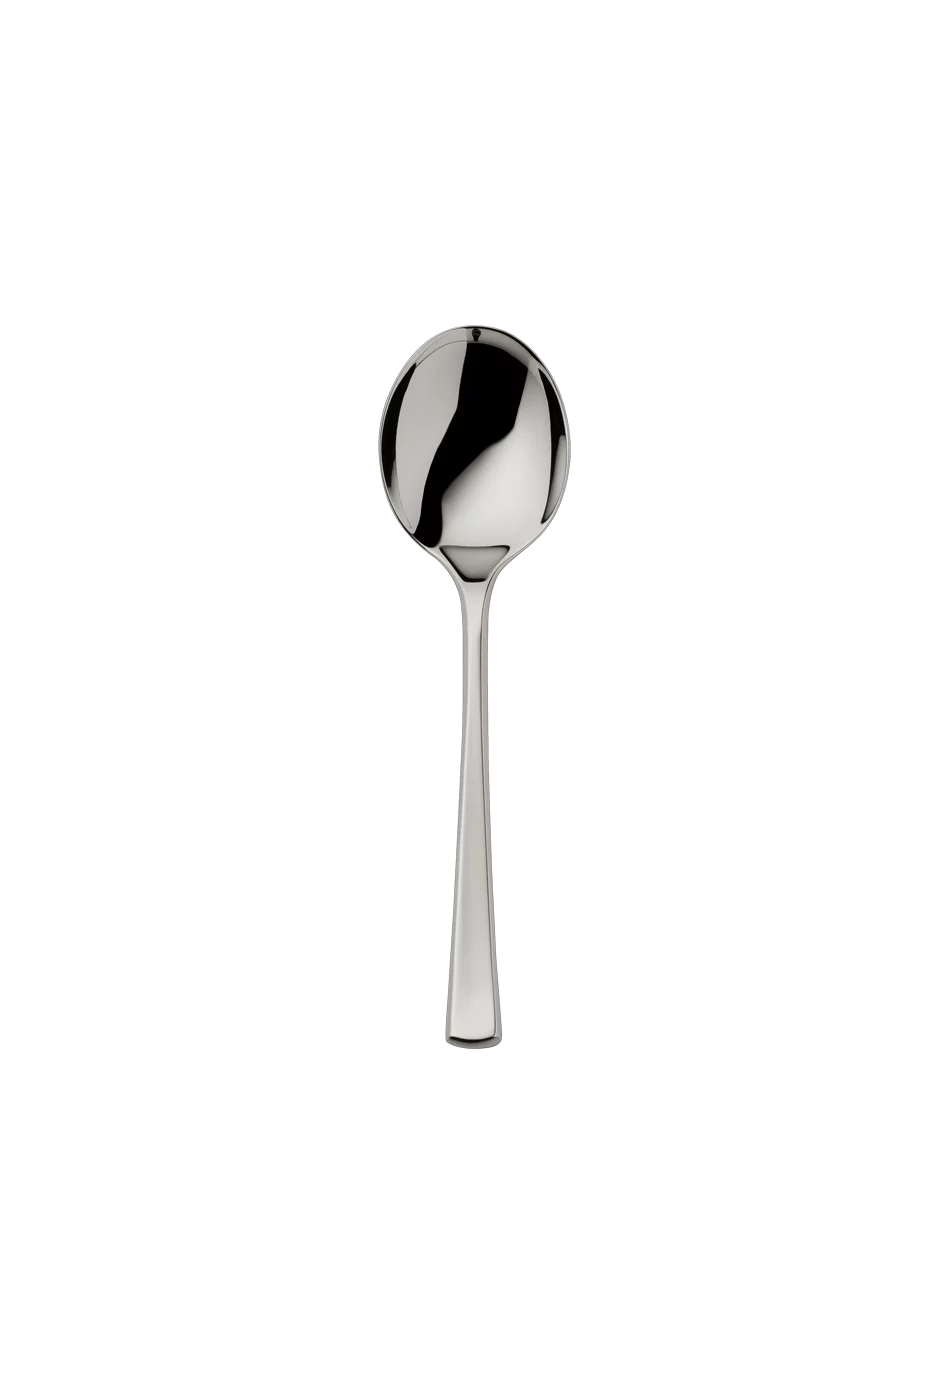 York Cream Spoon (Broth Spoon) (18/8 stainless steel)